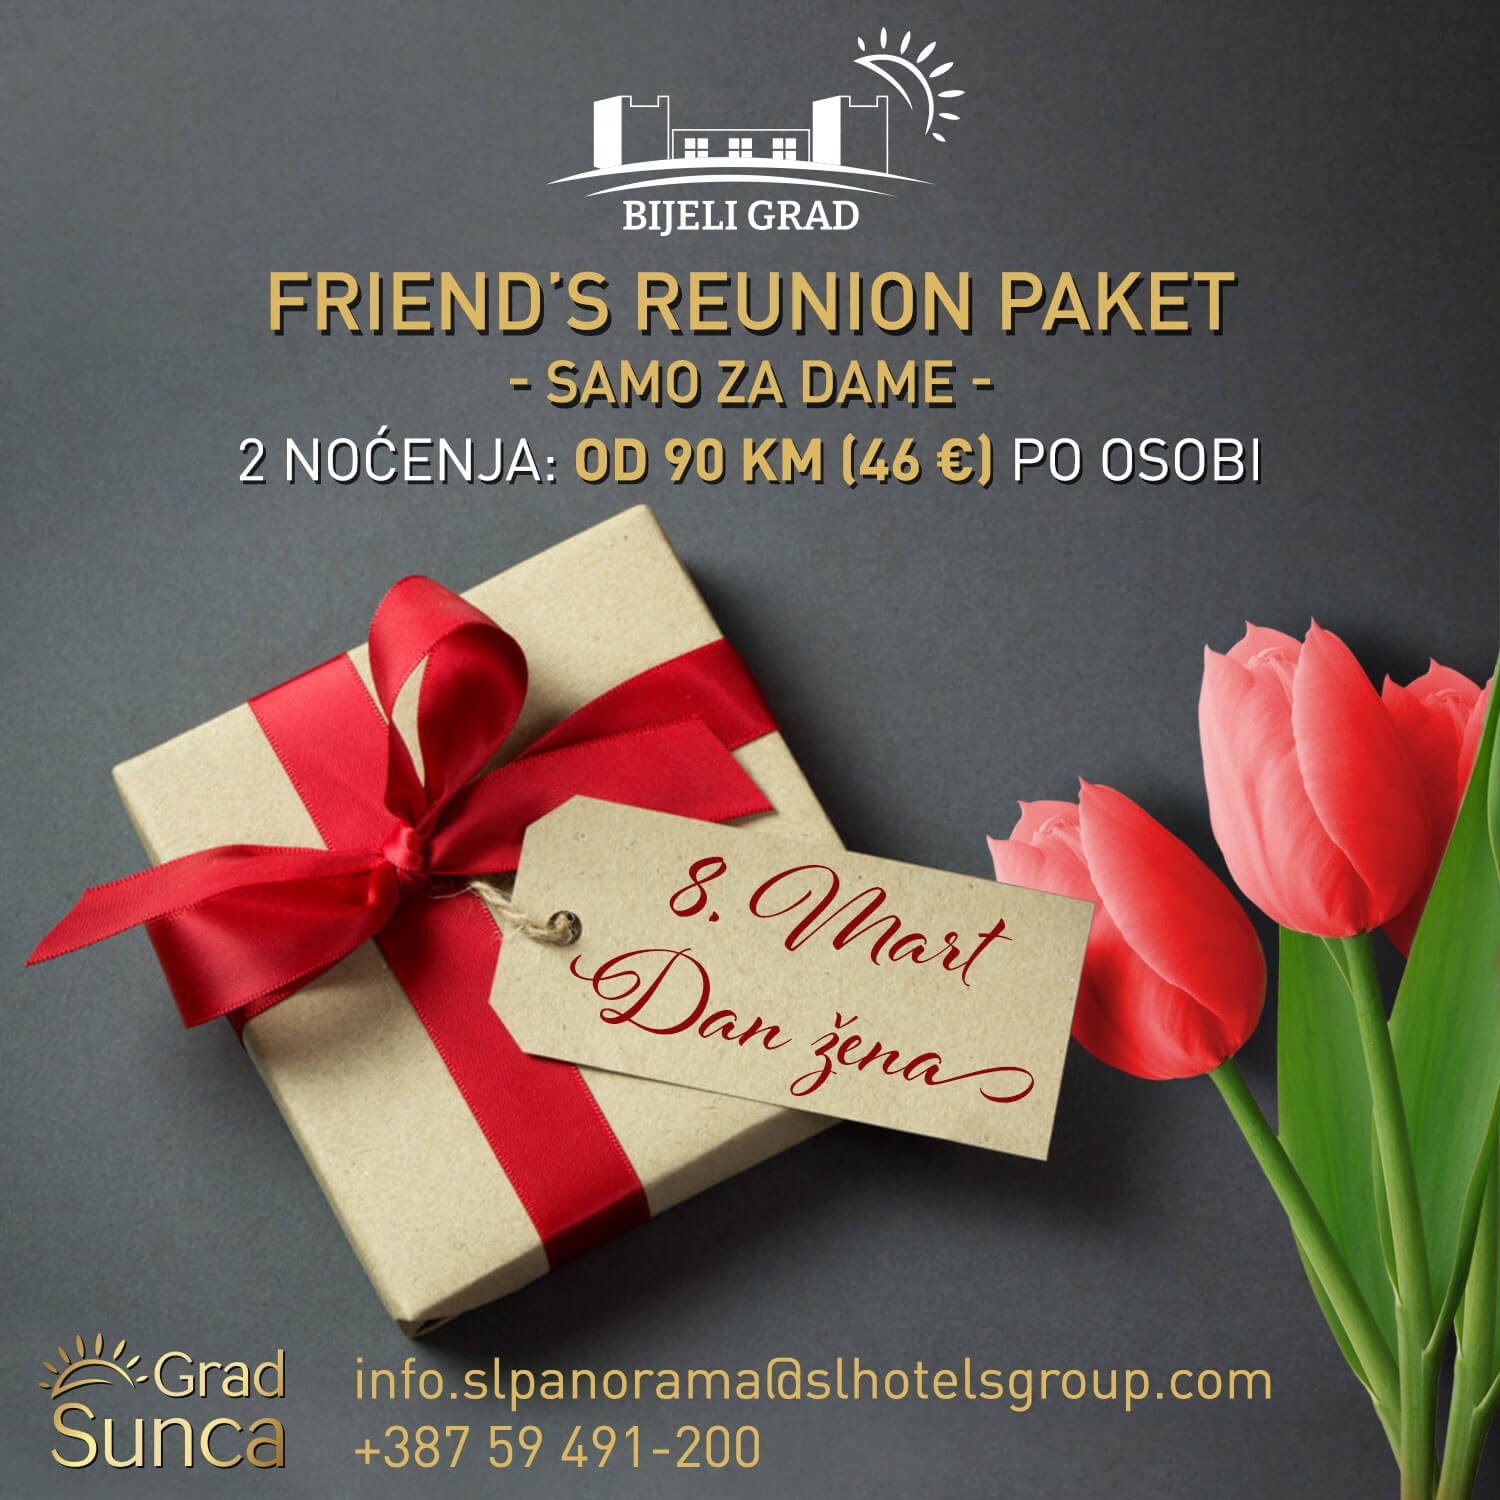 Friend's reunion paket